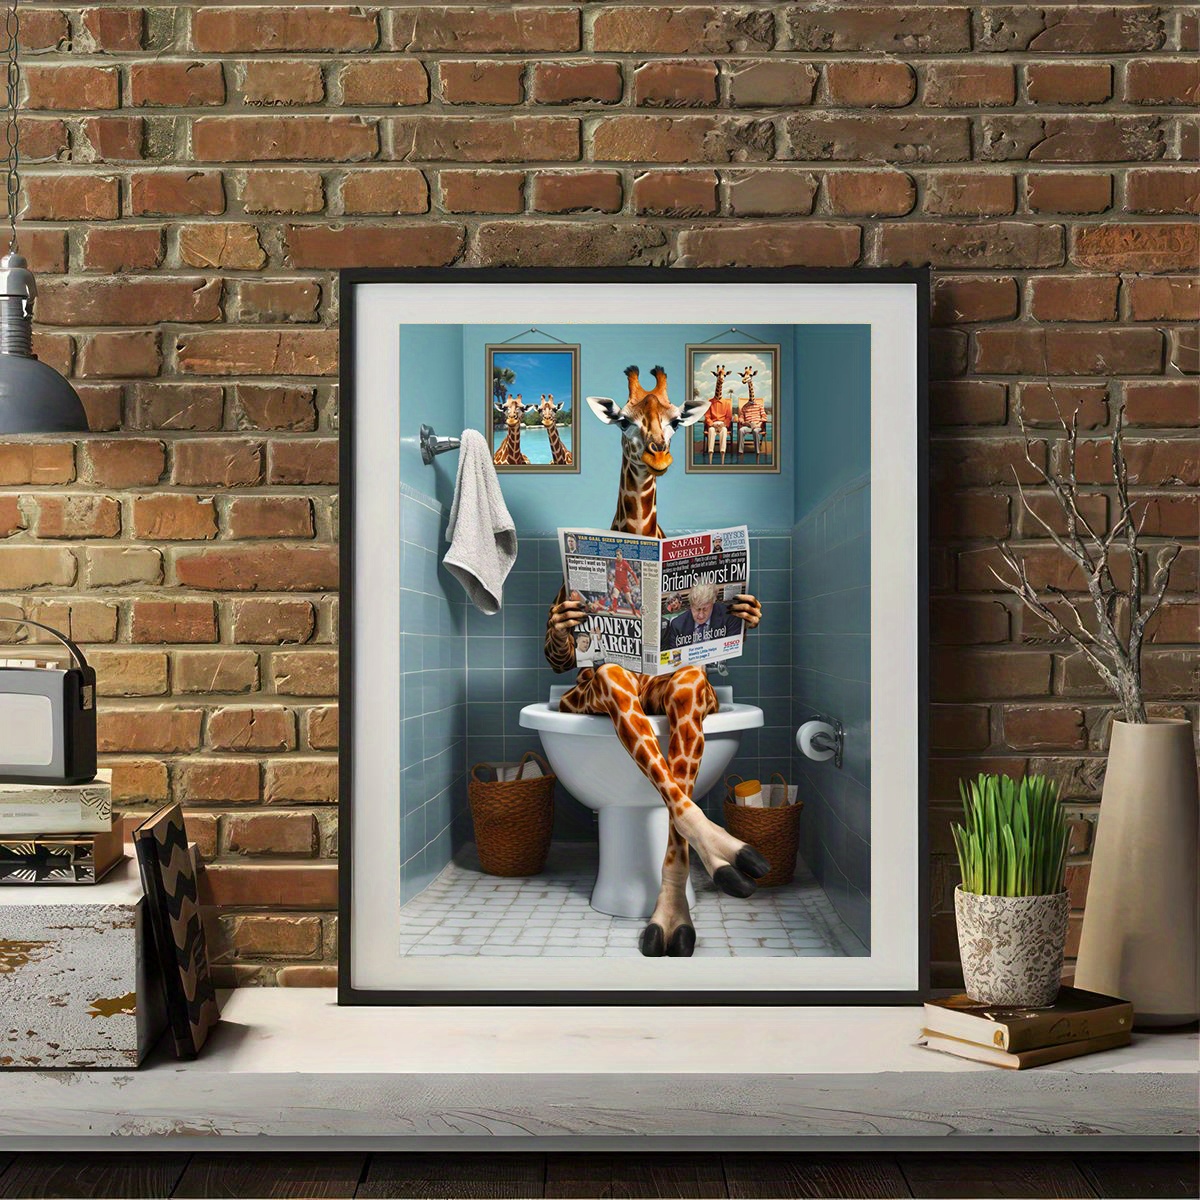 

Funny Giraffe Reading Newspaper On Toilet Canvas Art, 12x16" - Frameless Wall Decor For Home, Office, Cafe